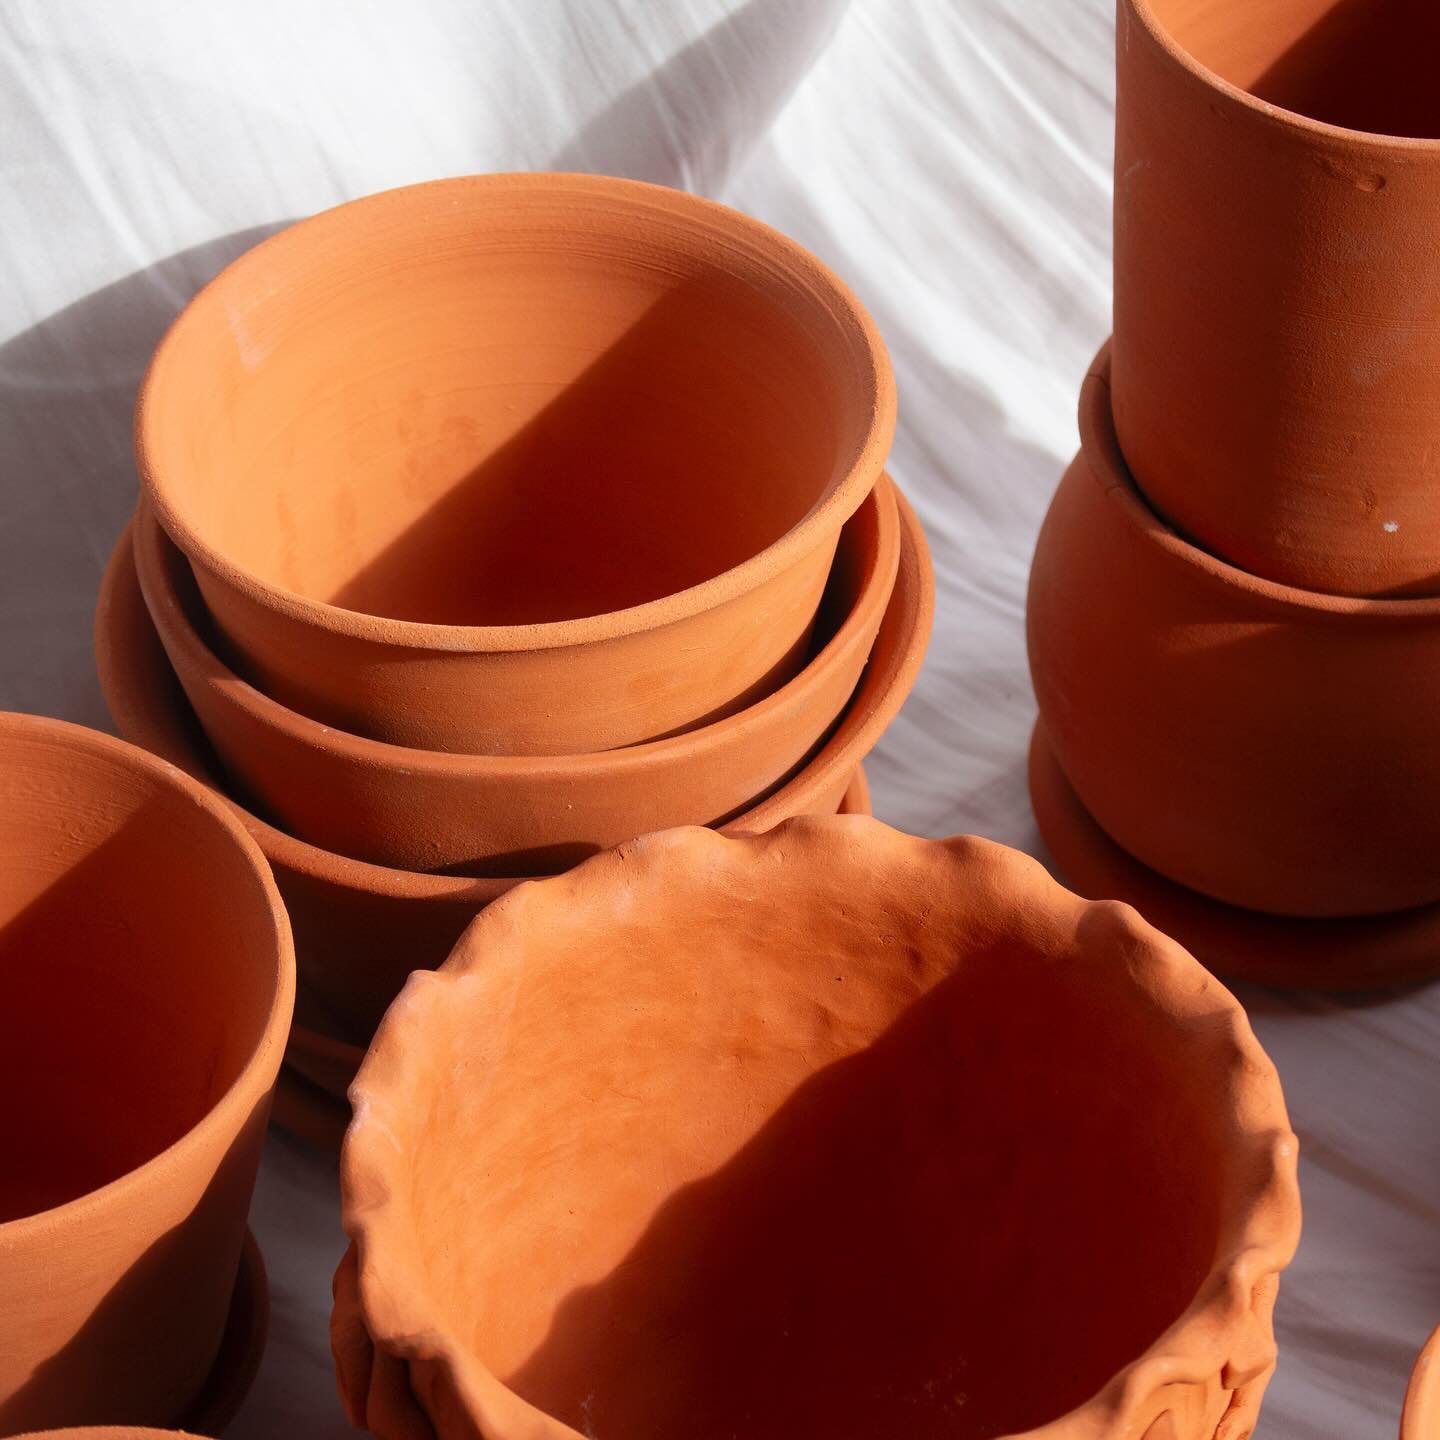 Terra cotta family portraits coming soon.
.
.
.
#terracotta #plantpots #pottery #ceramics #handmade #handmadepottery #modernceramics #handmadeceramics #yeg #yegmade #yegdesign #yegmaker #yegarts #visualvibes #madeincanada #madelocal #shoplocal #shops